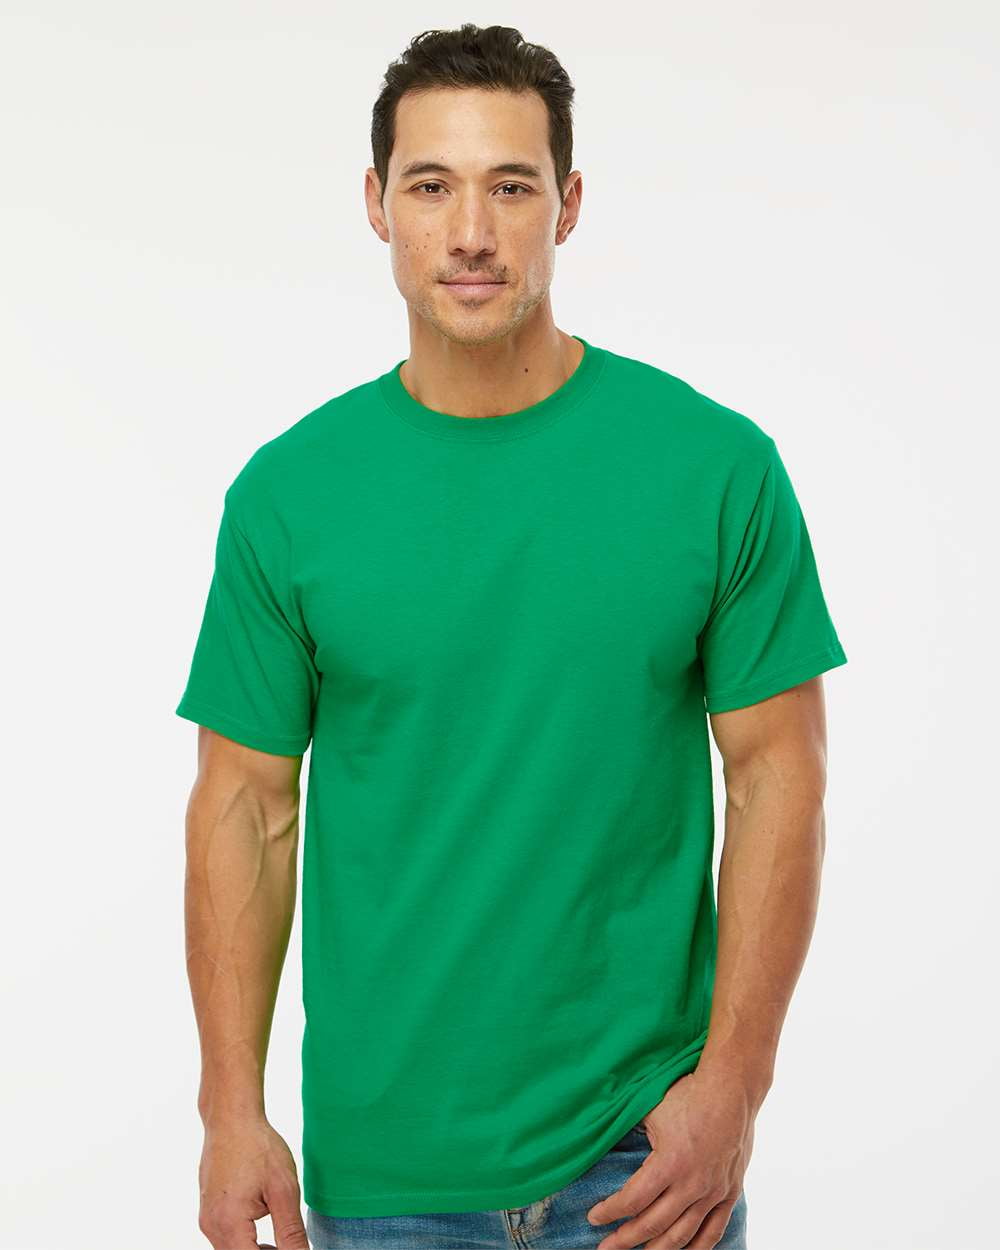 M&O - Gold Soft Touch T-Shirt - 4800 - Irish Green - Size: XL